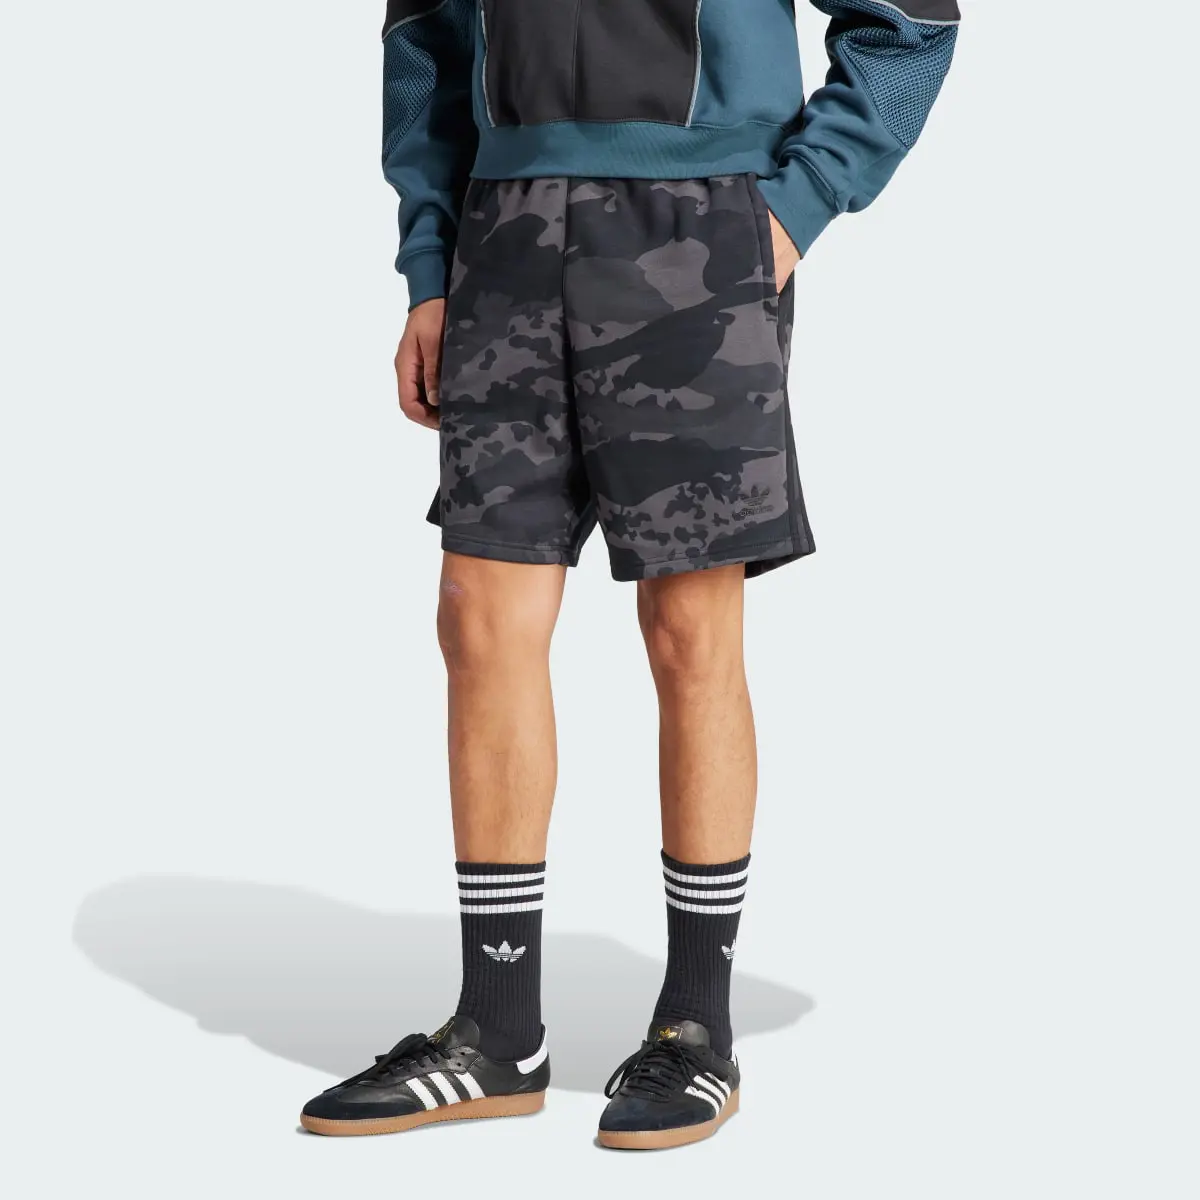 Adidas Camo Shorts. 1